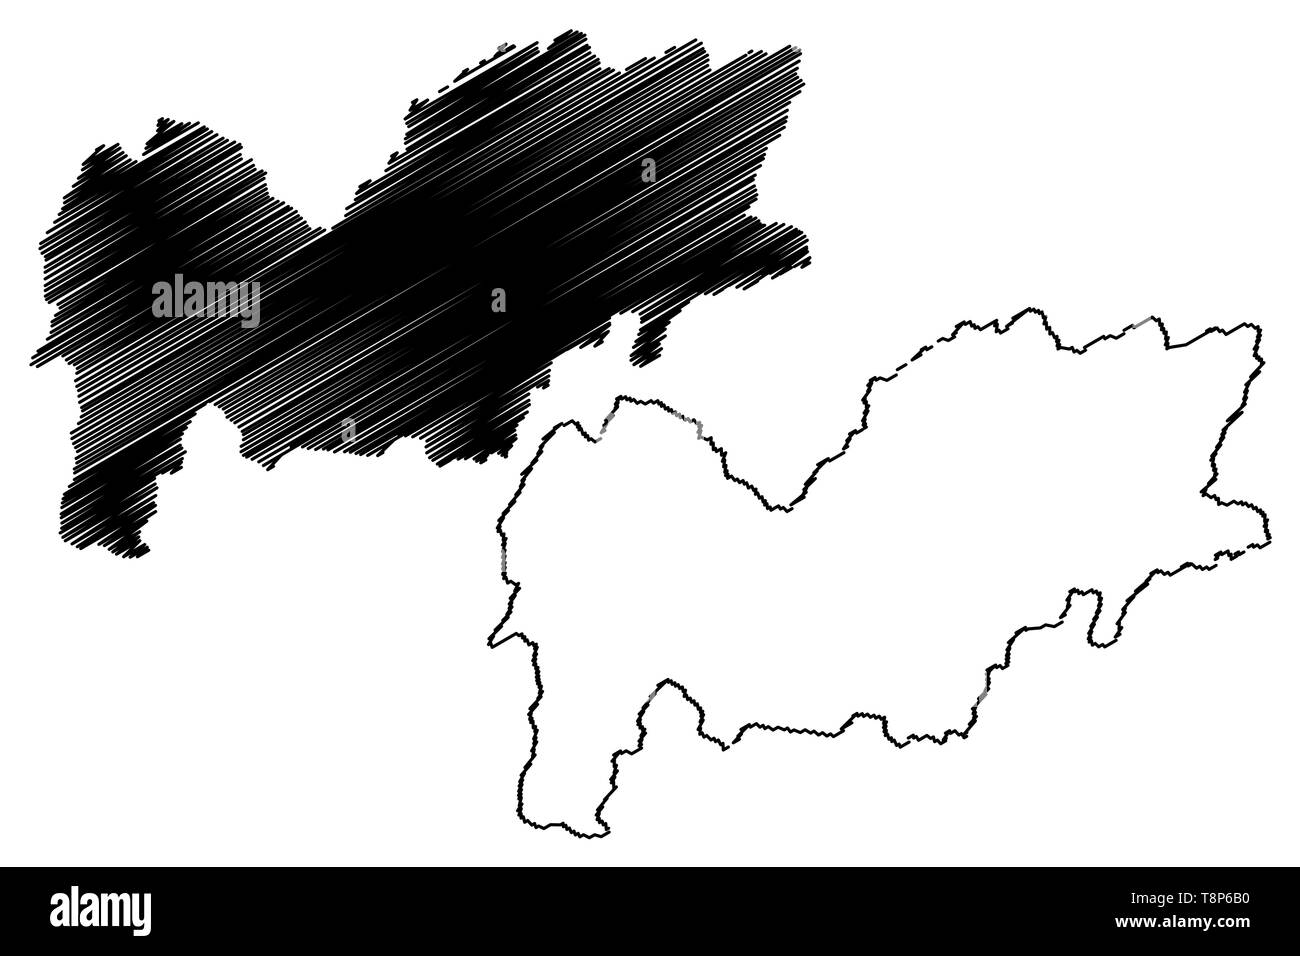 Urozgan Provinz (Islamische Republik Afghanistan, Provinzen Afghanistans) Karte Vektor-illustration, kritzeln Skizze Uruzgan oder Oruzgan Karte Stock Vektor